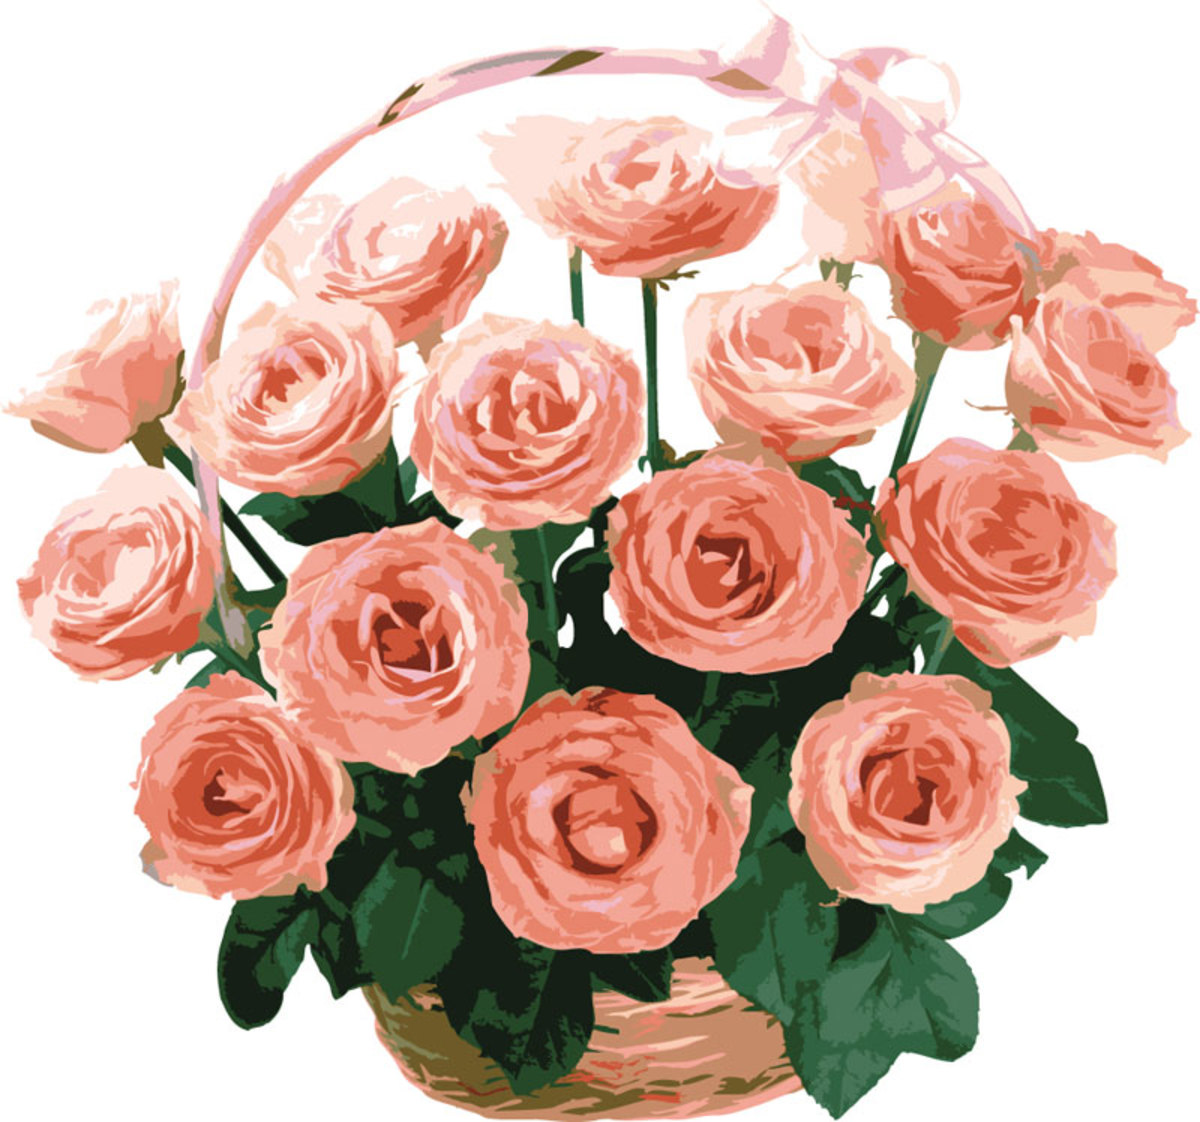 Basket of Pink Roses